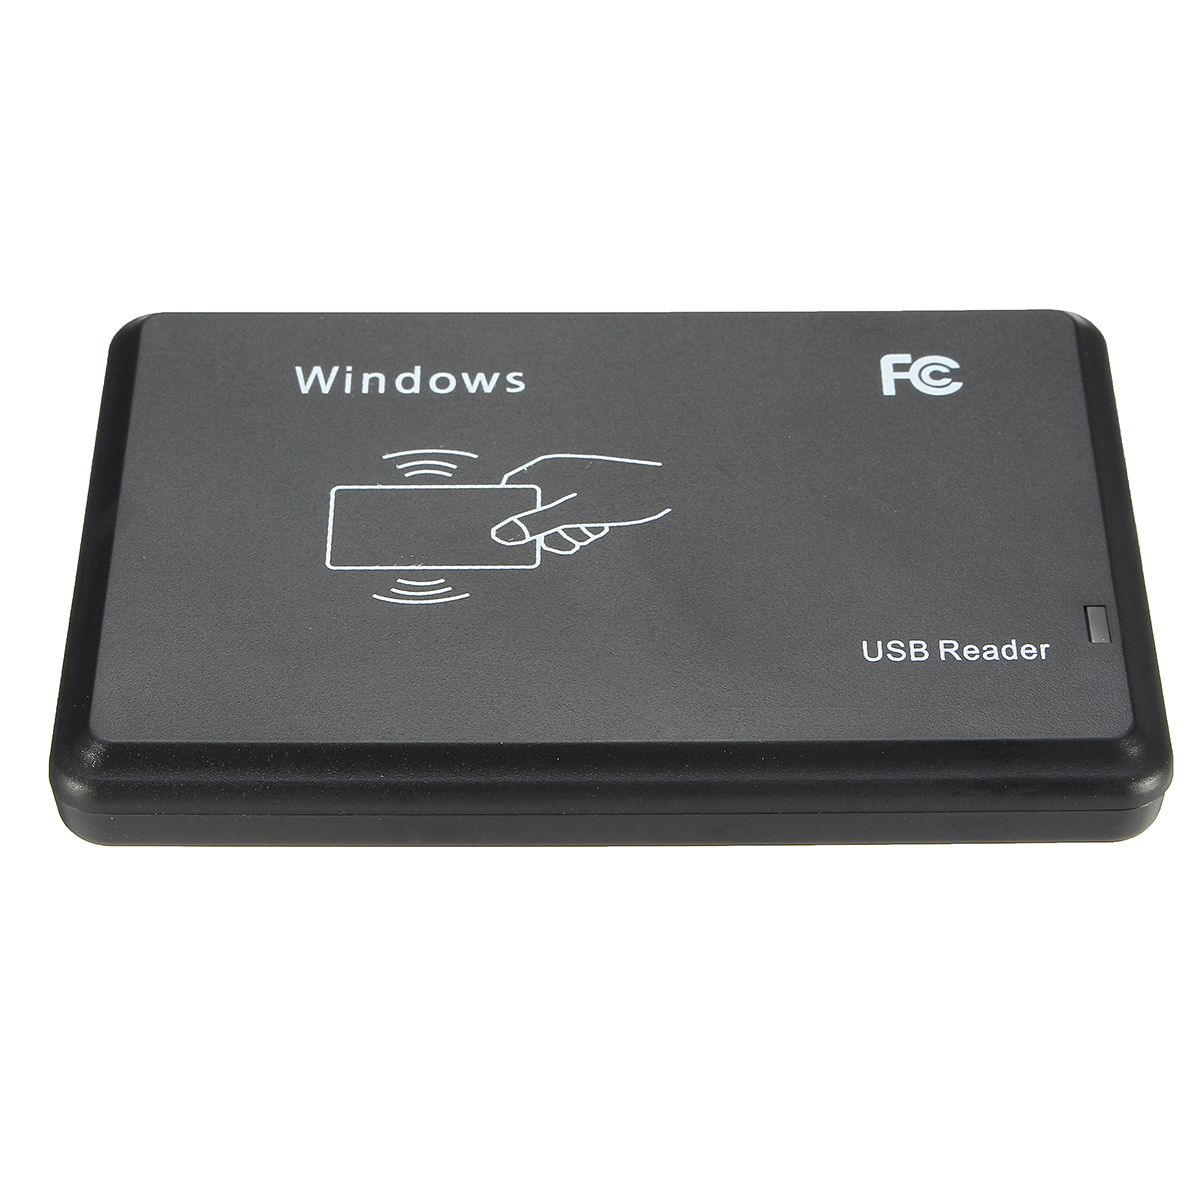 USB-Interface-125Khz-RFID-Contactless-Proximity-Sensor-ID-Card-Reader-1182857